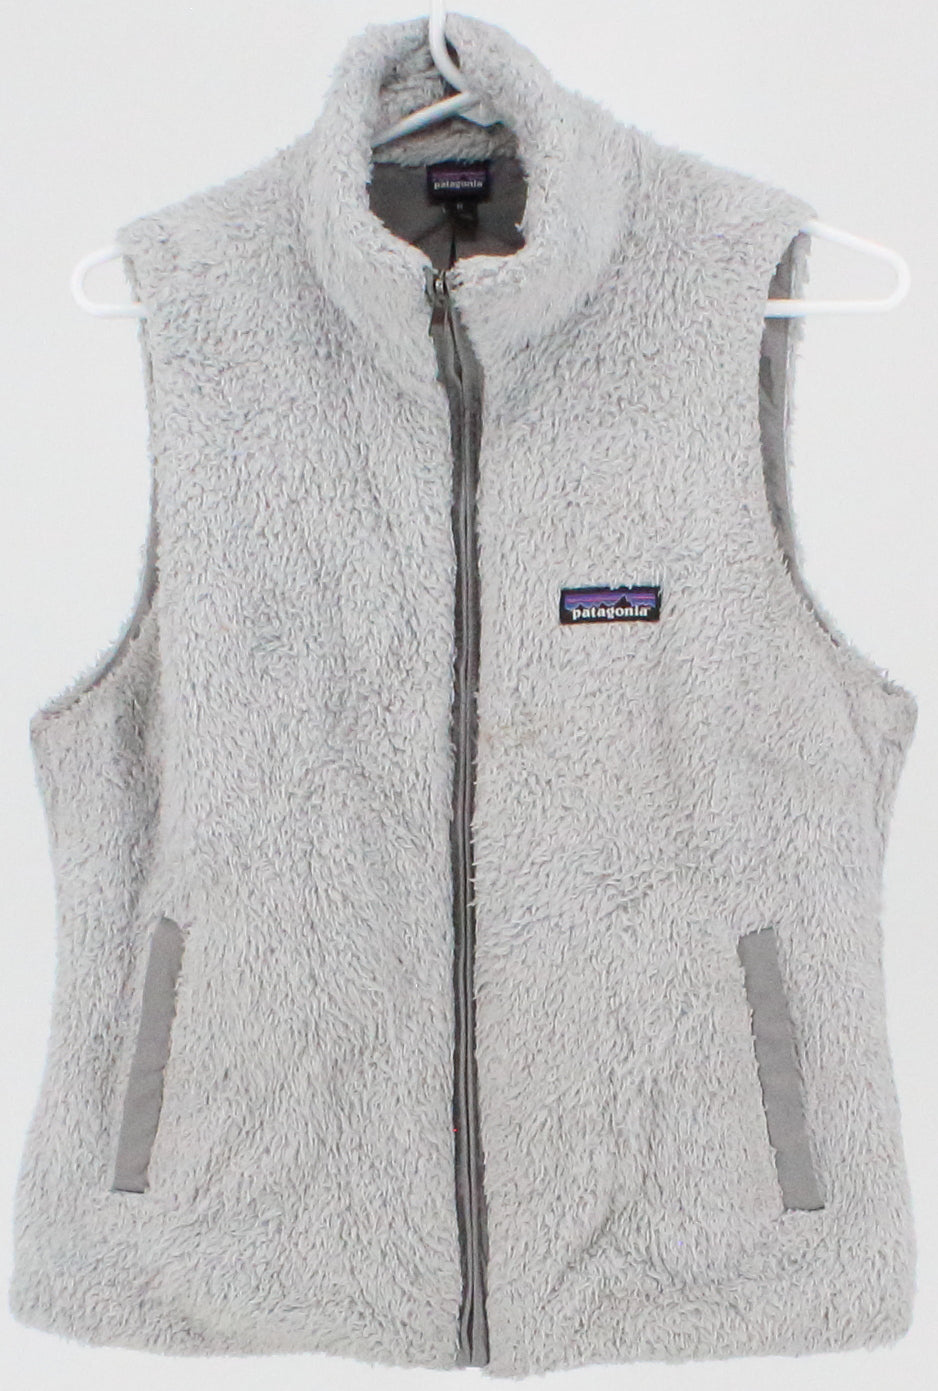 Patagonia Grey Teddy Vest